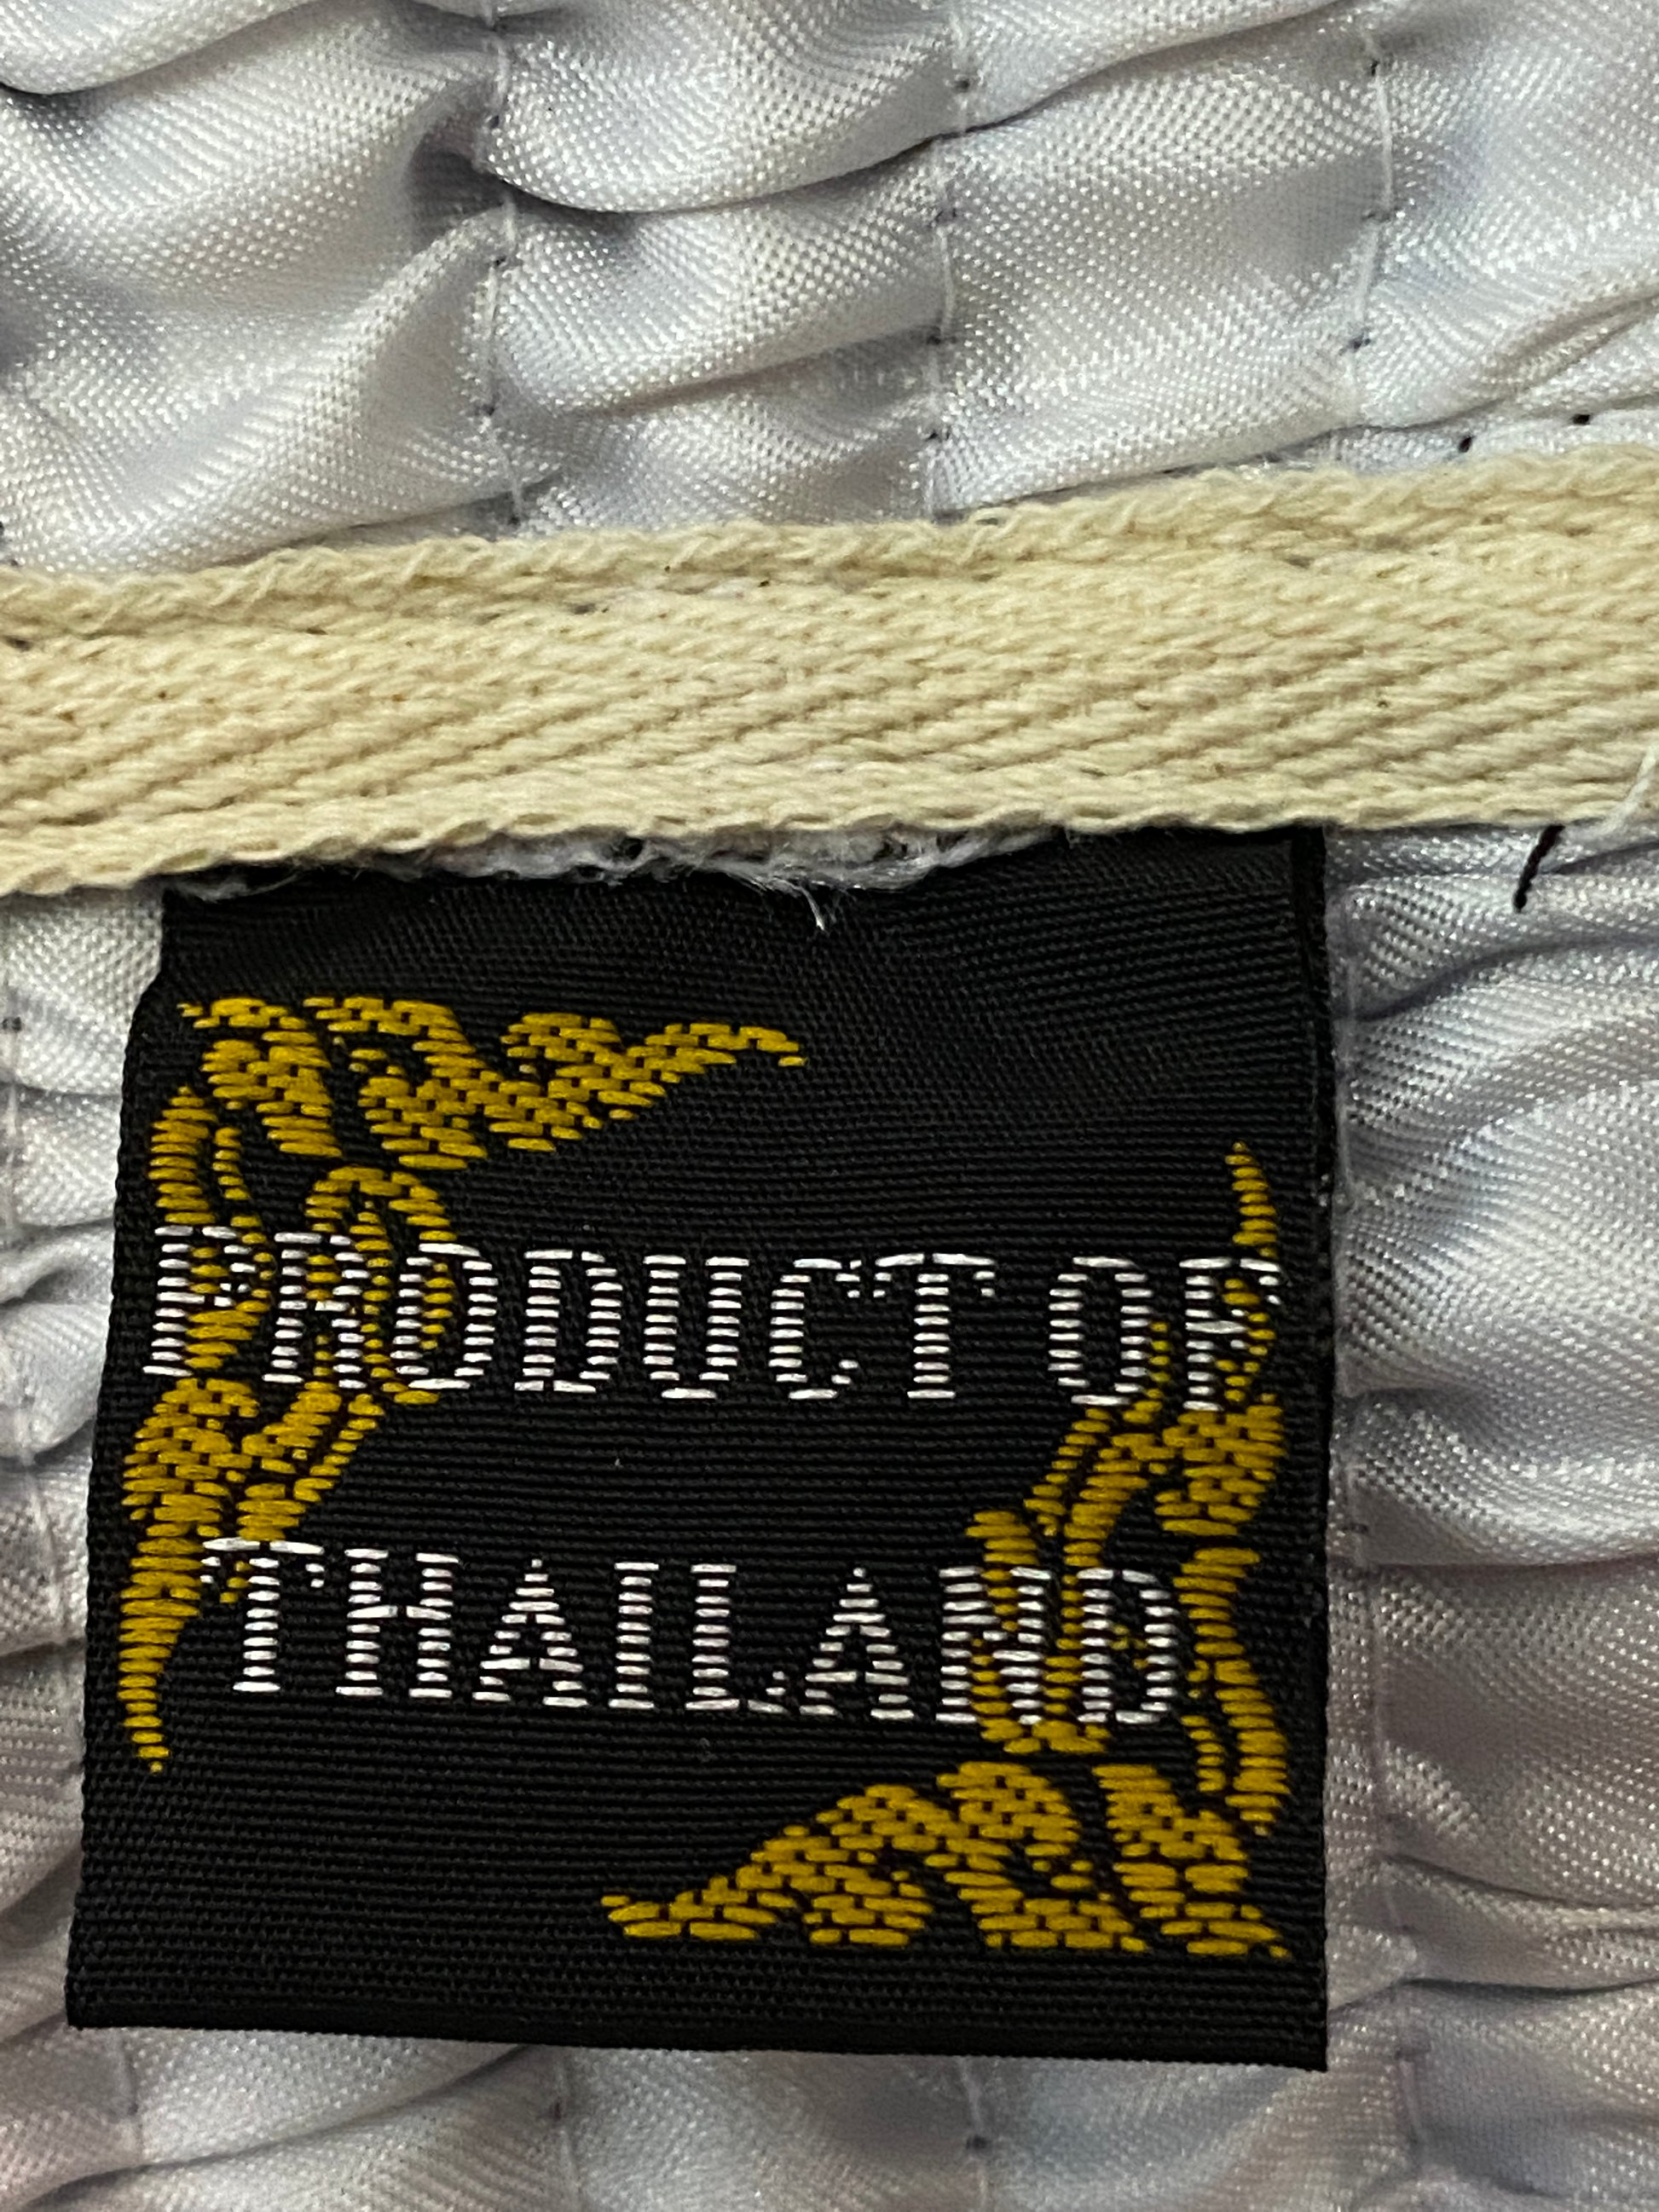 90s Battle Vintage Men's Muay Thai Boxing Shorts - Medium White Nylon